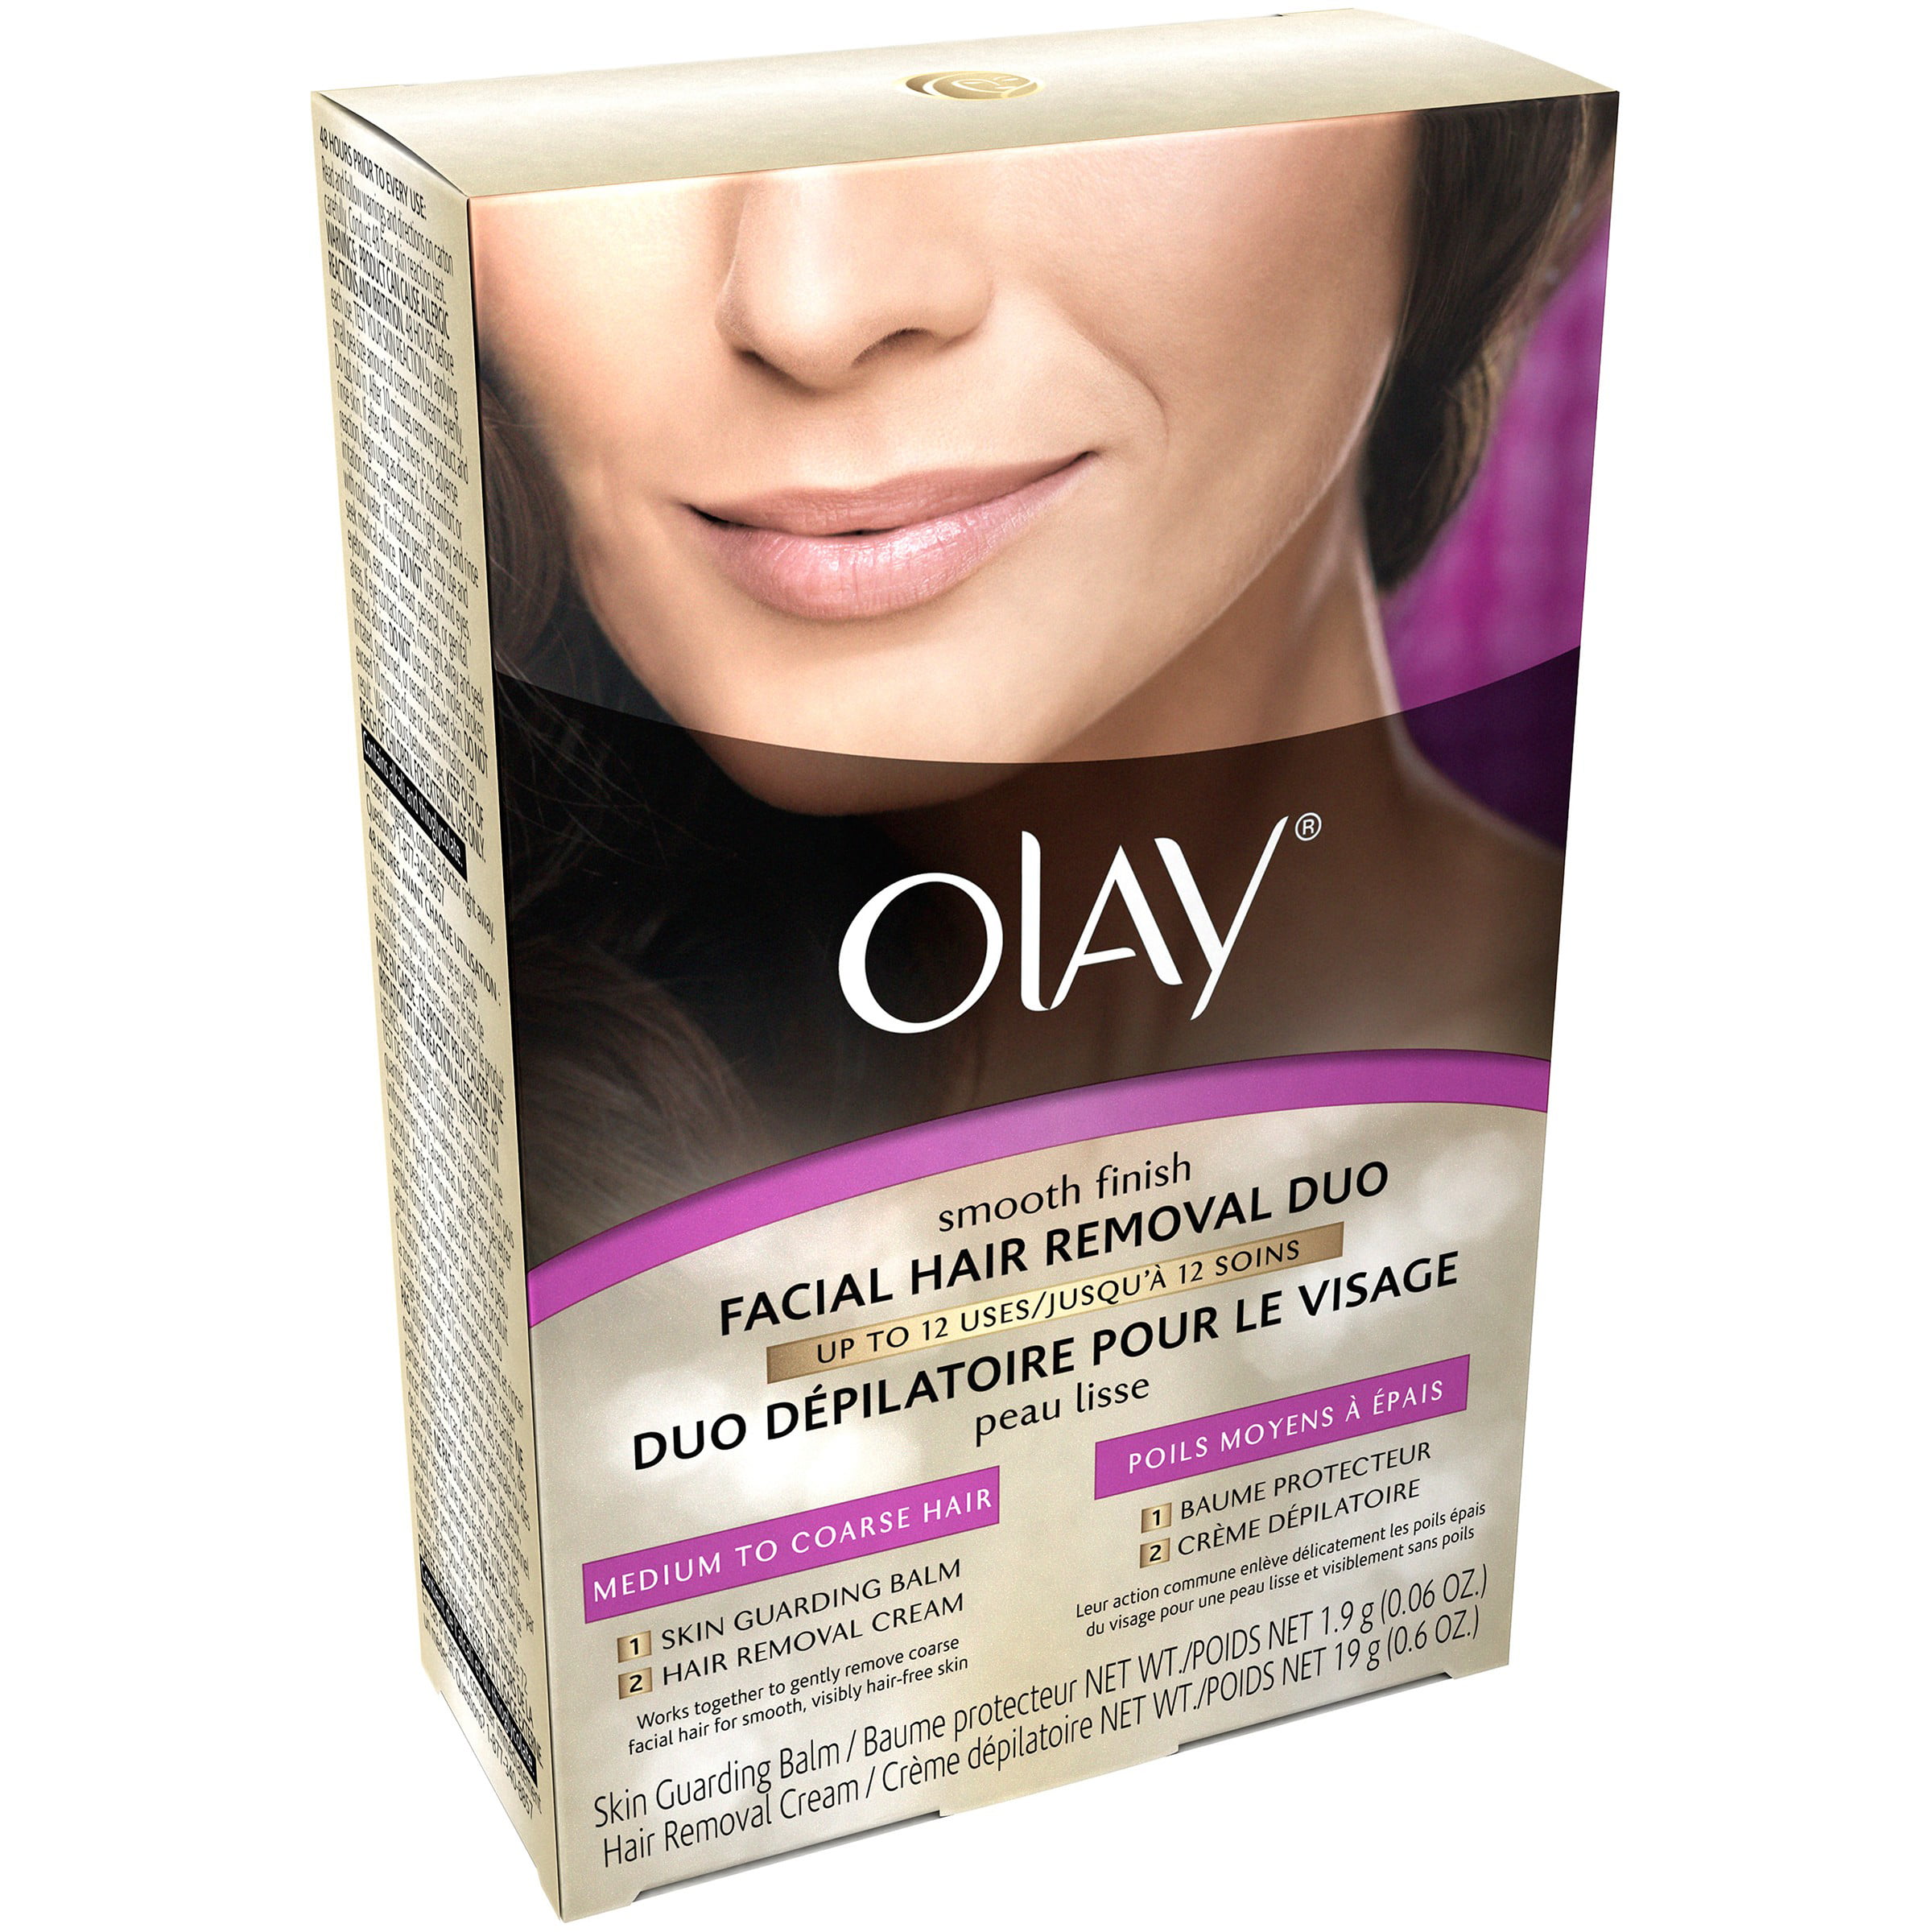 Olay Smooth Finish Facial Hair Removal Duo Medium To Coarse Hair